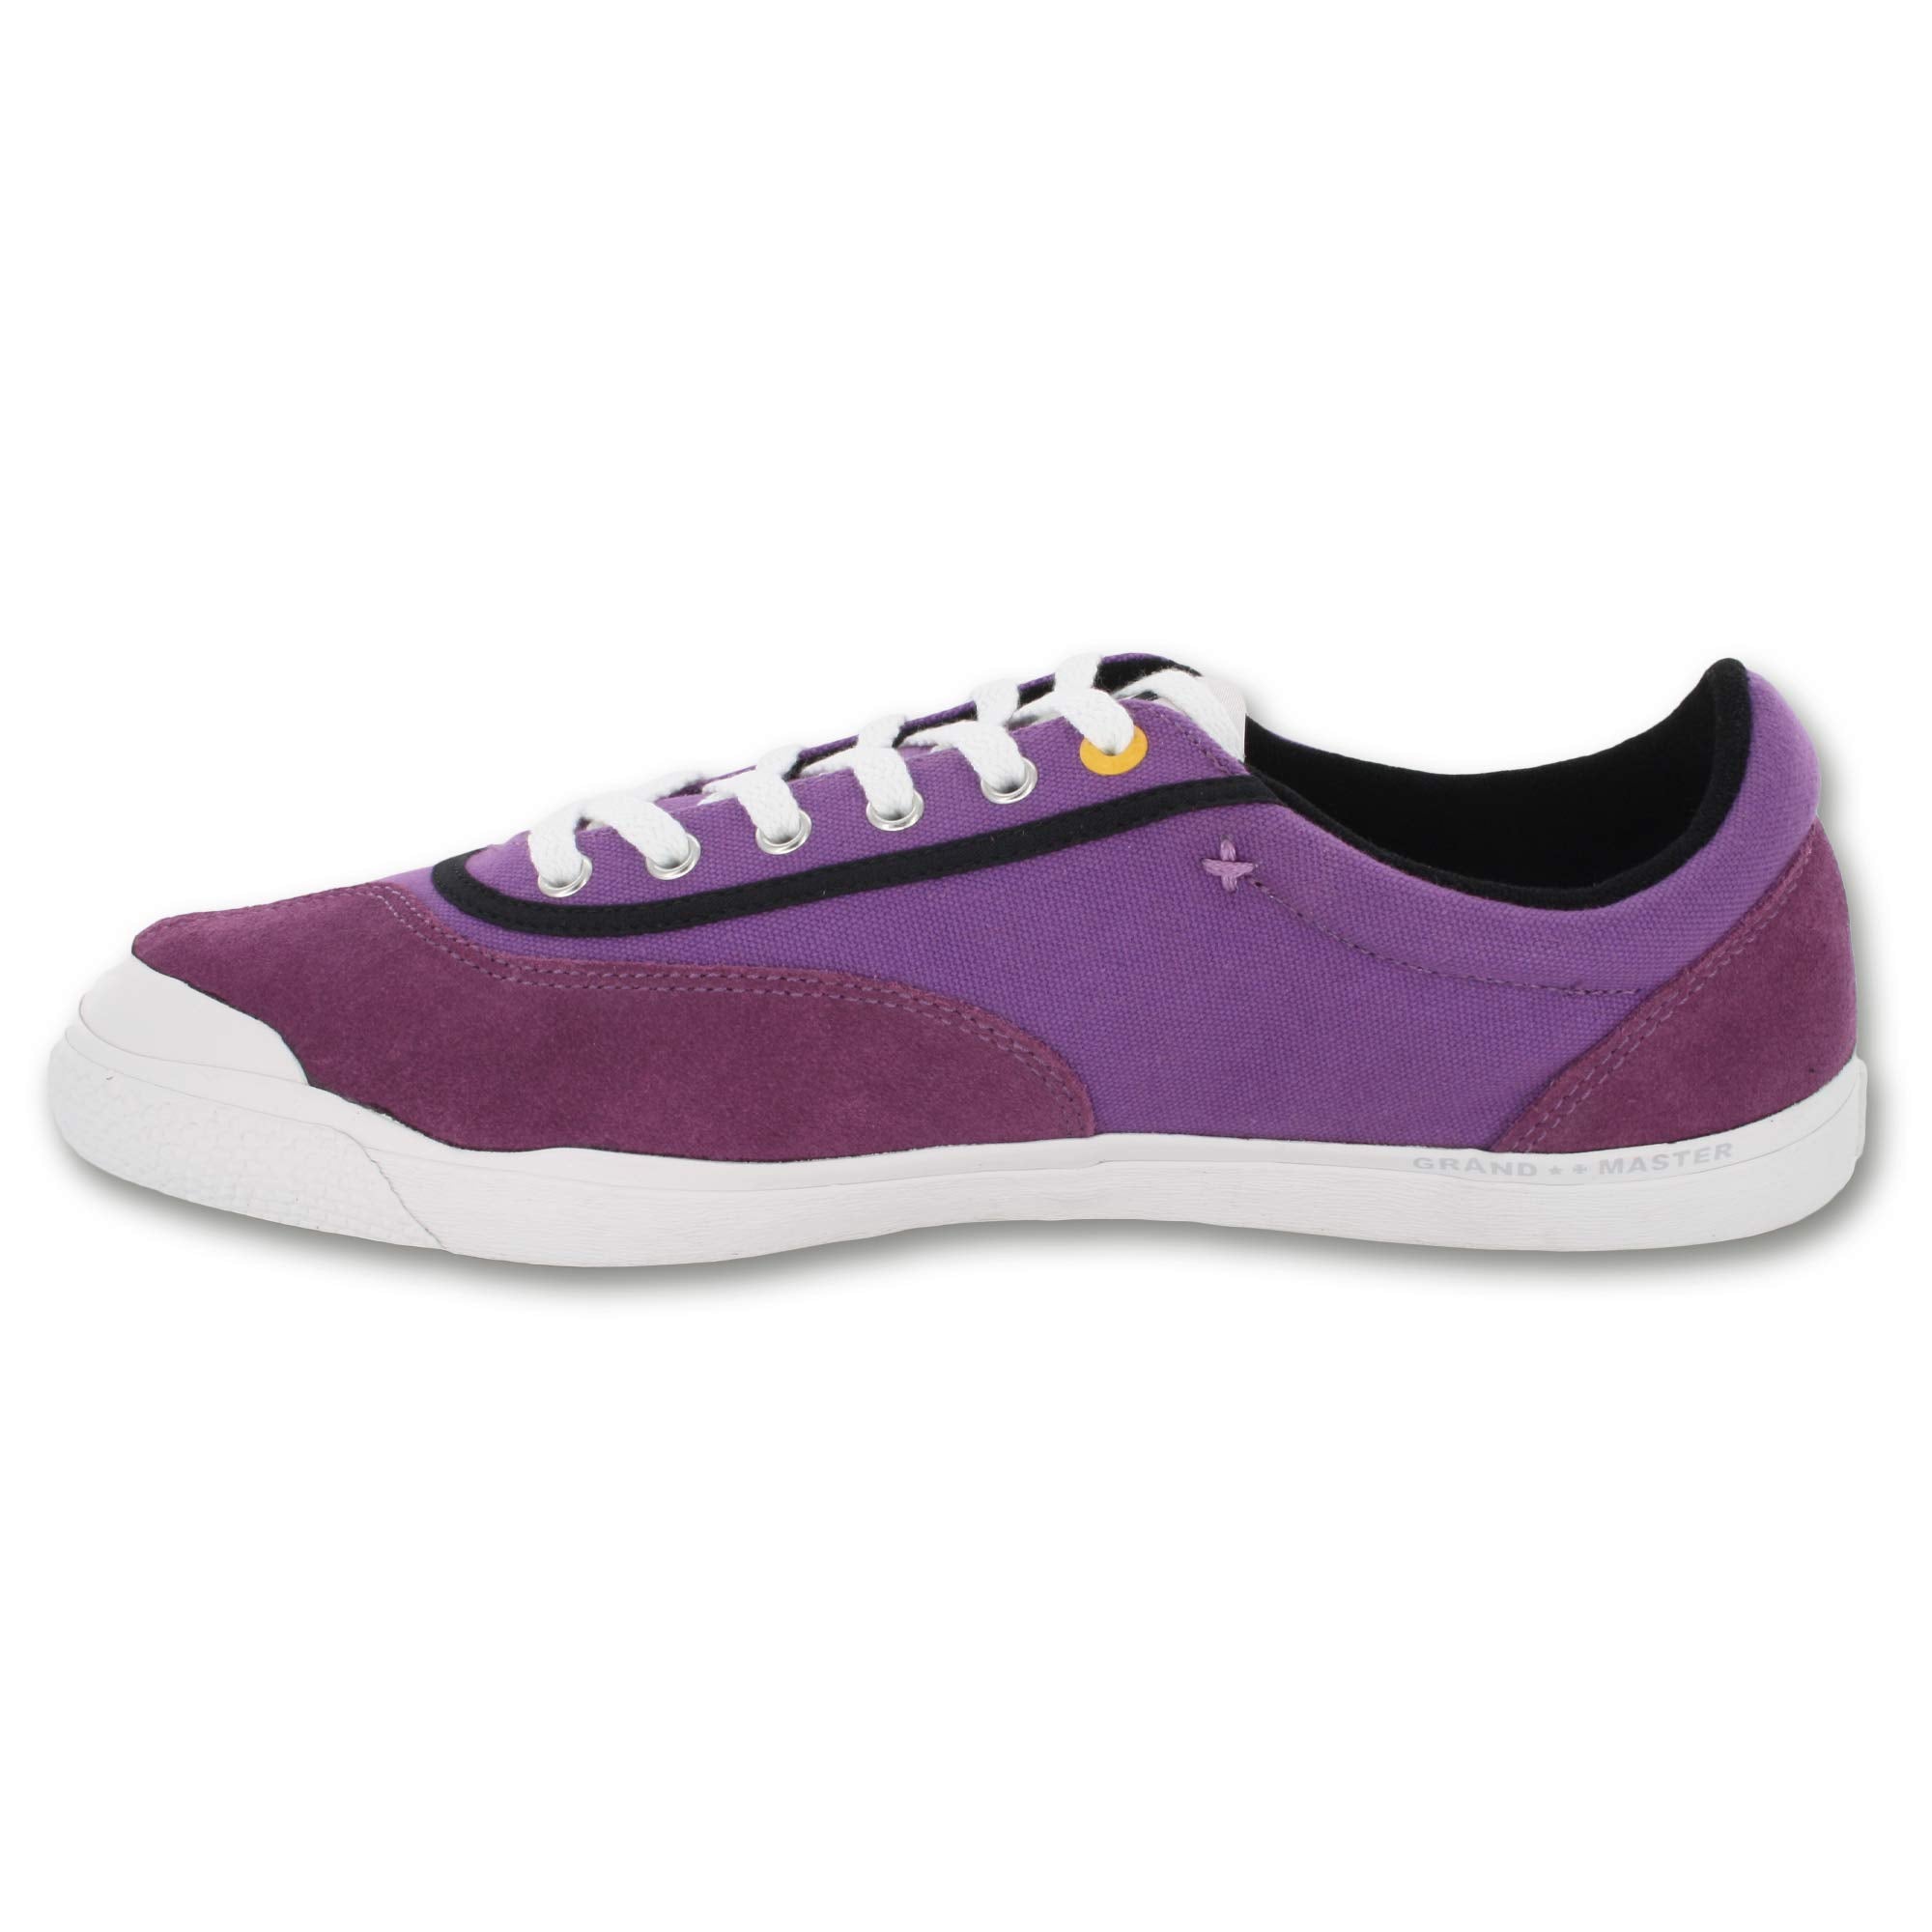 Pele Sports Men's Armador Canvas Sneakers - Bright Violet / White